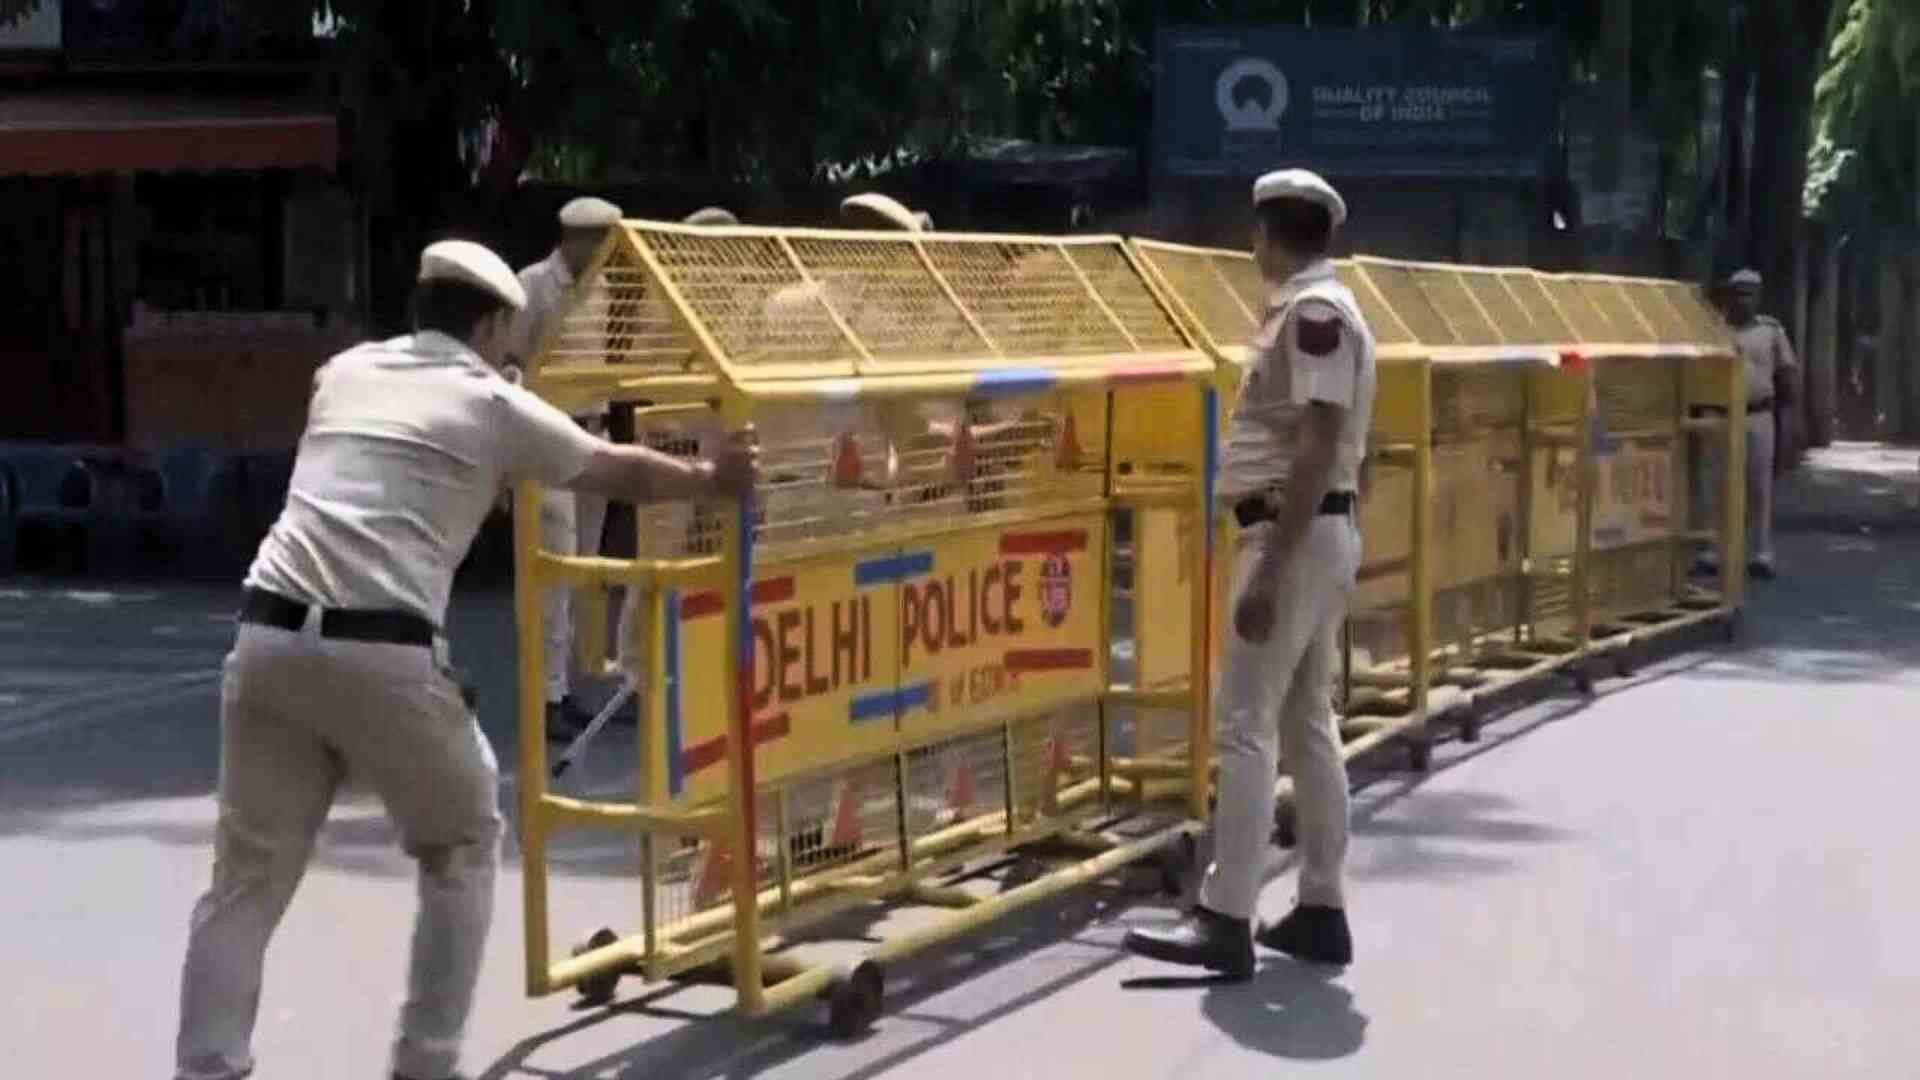 BMC headquarters receives threatening mail, Mumbai Police Said (Rep. Image)